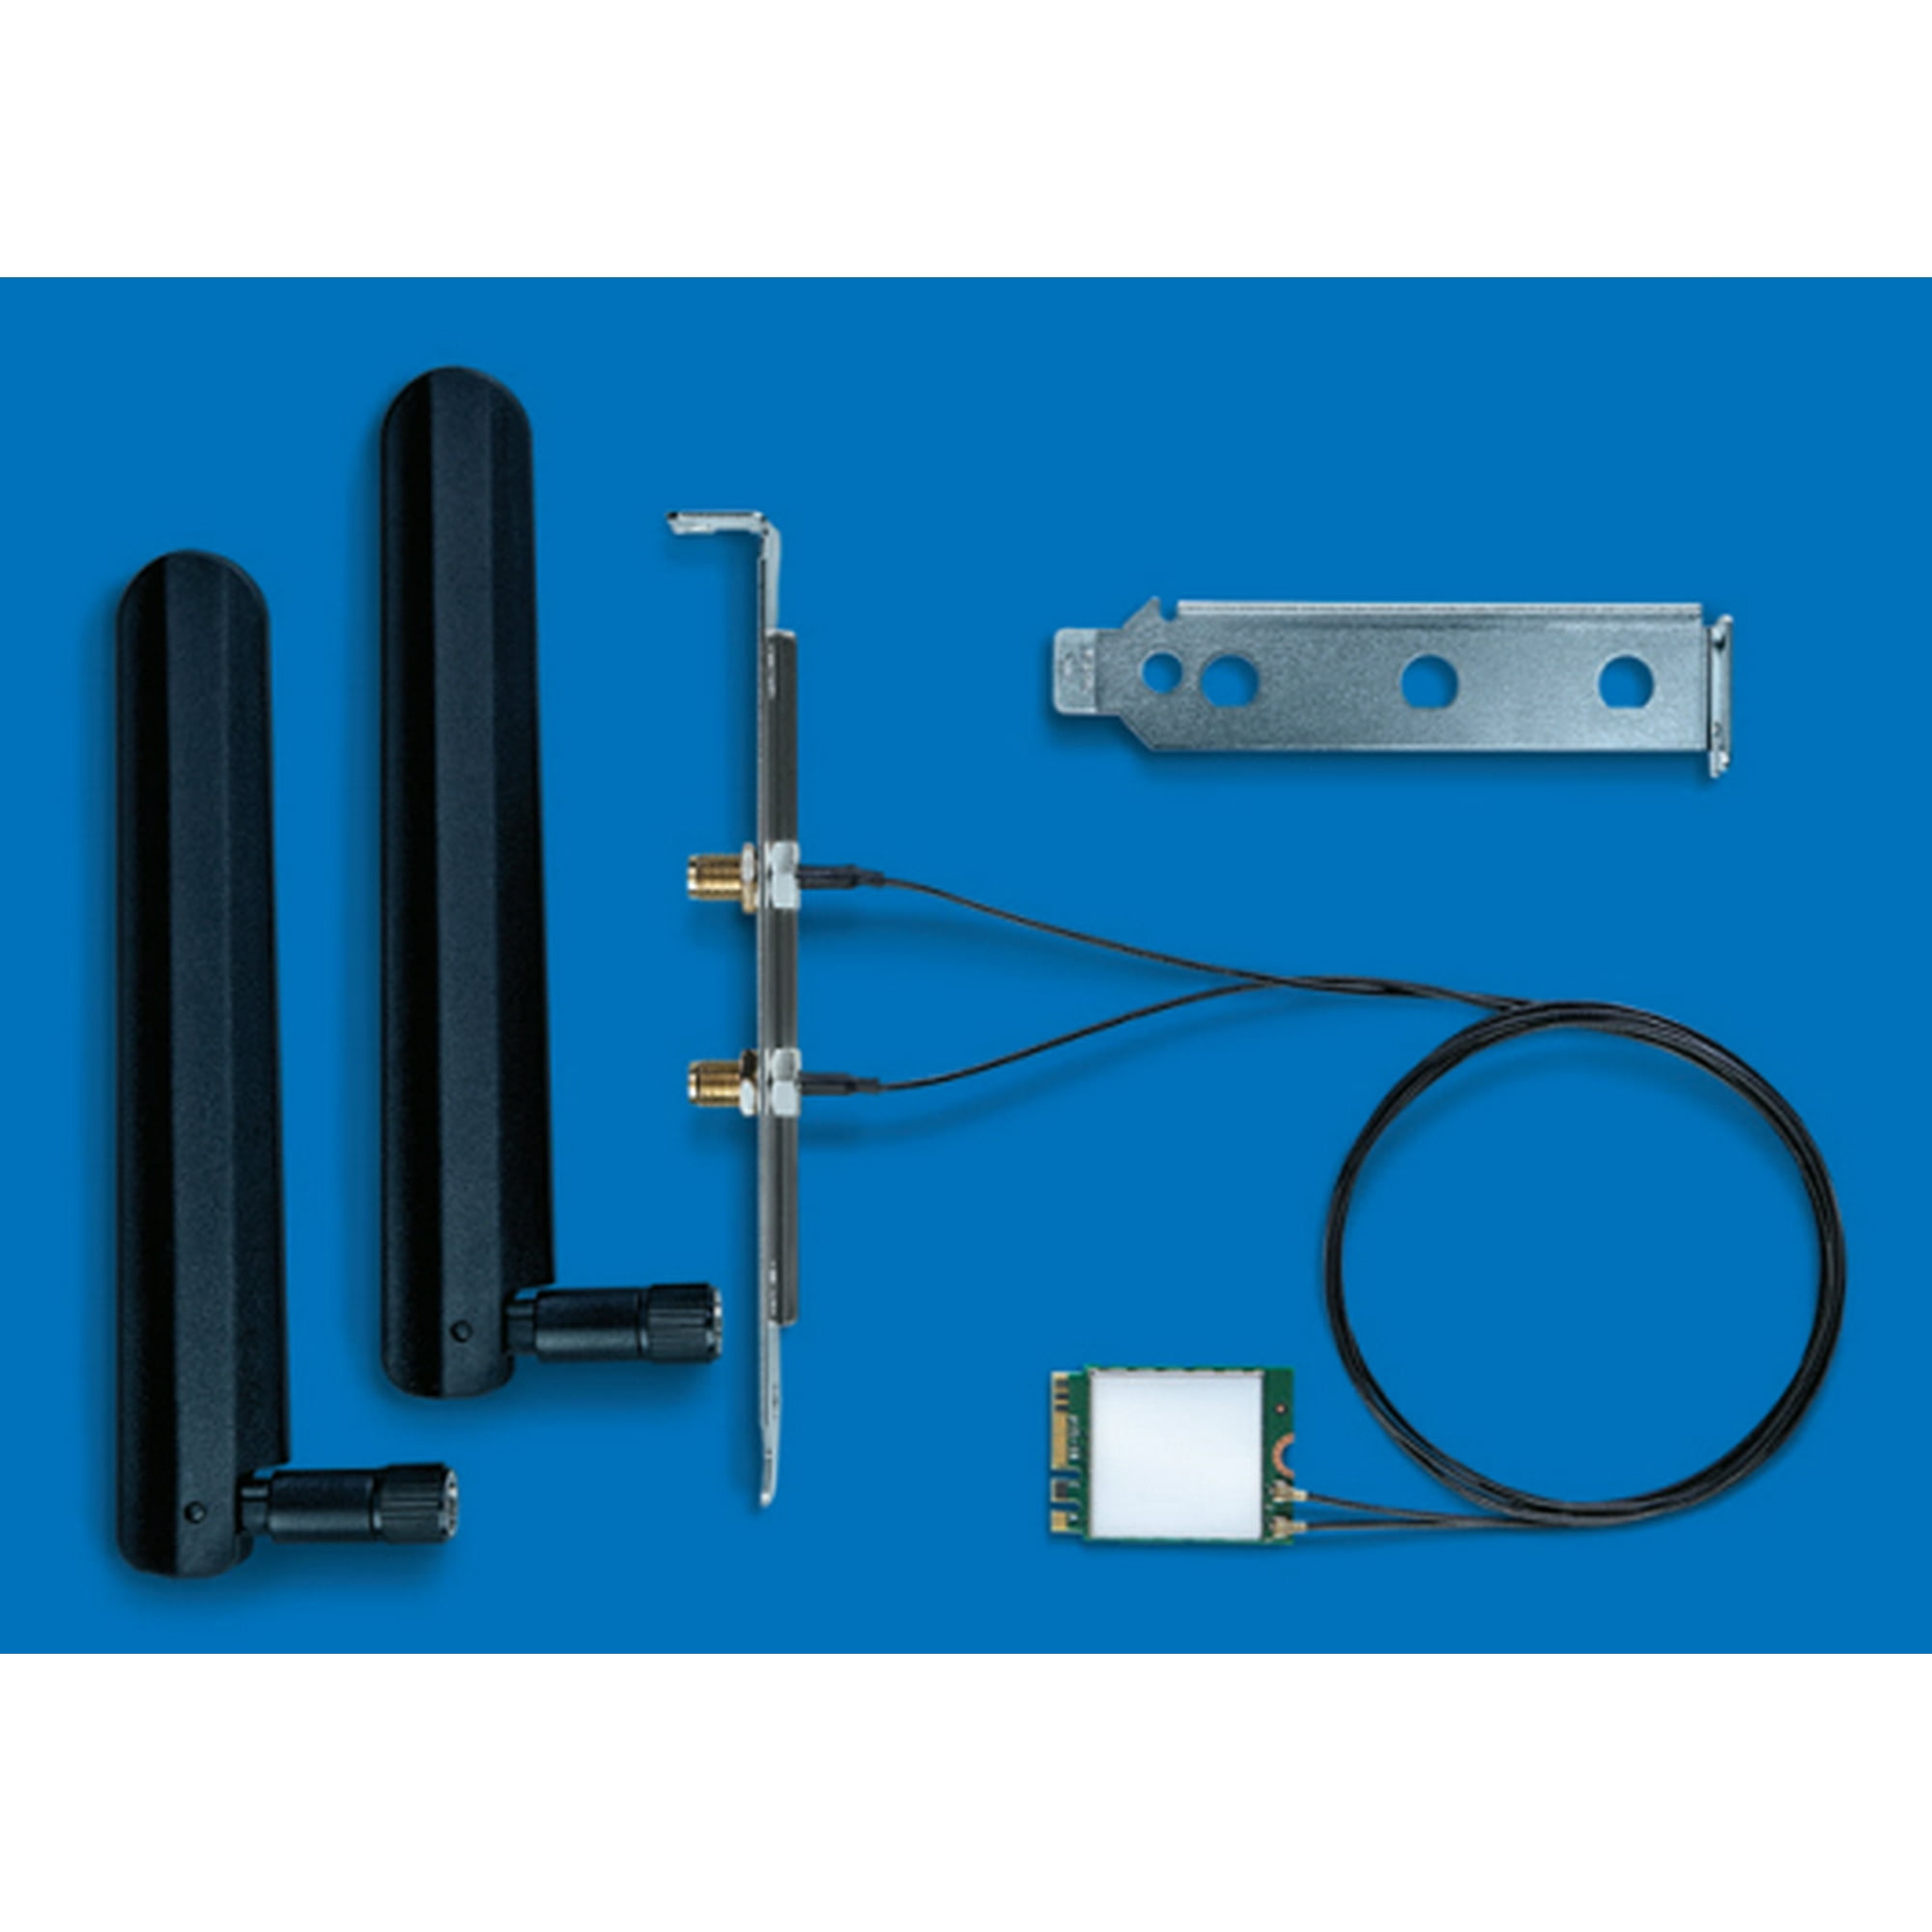 Dual Band Wireless-AC 8265 - Desktop Kit - adapter - M.2 Card - 802.11ac, Bluetooth 4.2 Walmart Canada